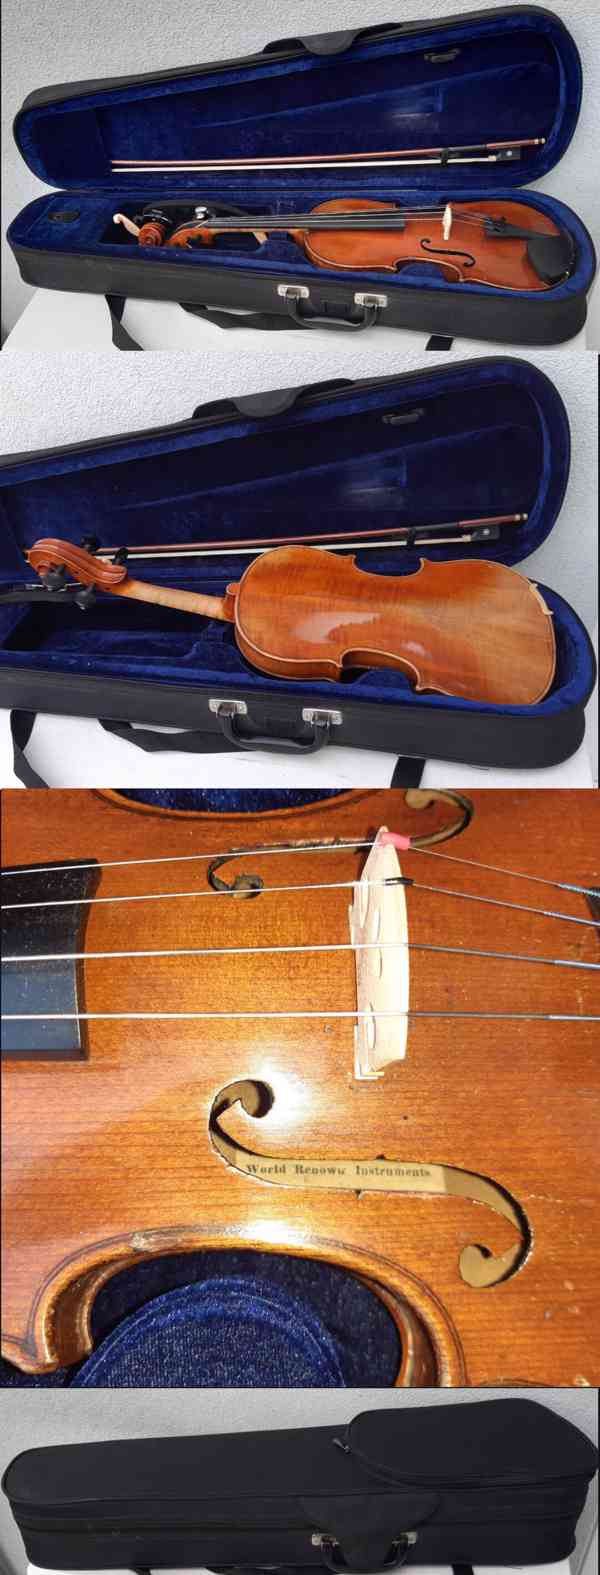  Housle 4/4 v orig. futrálu - World Renowe Instruments